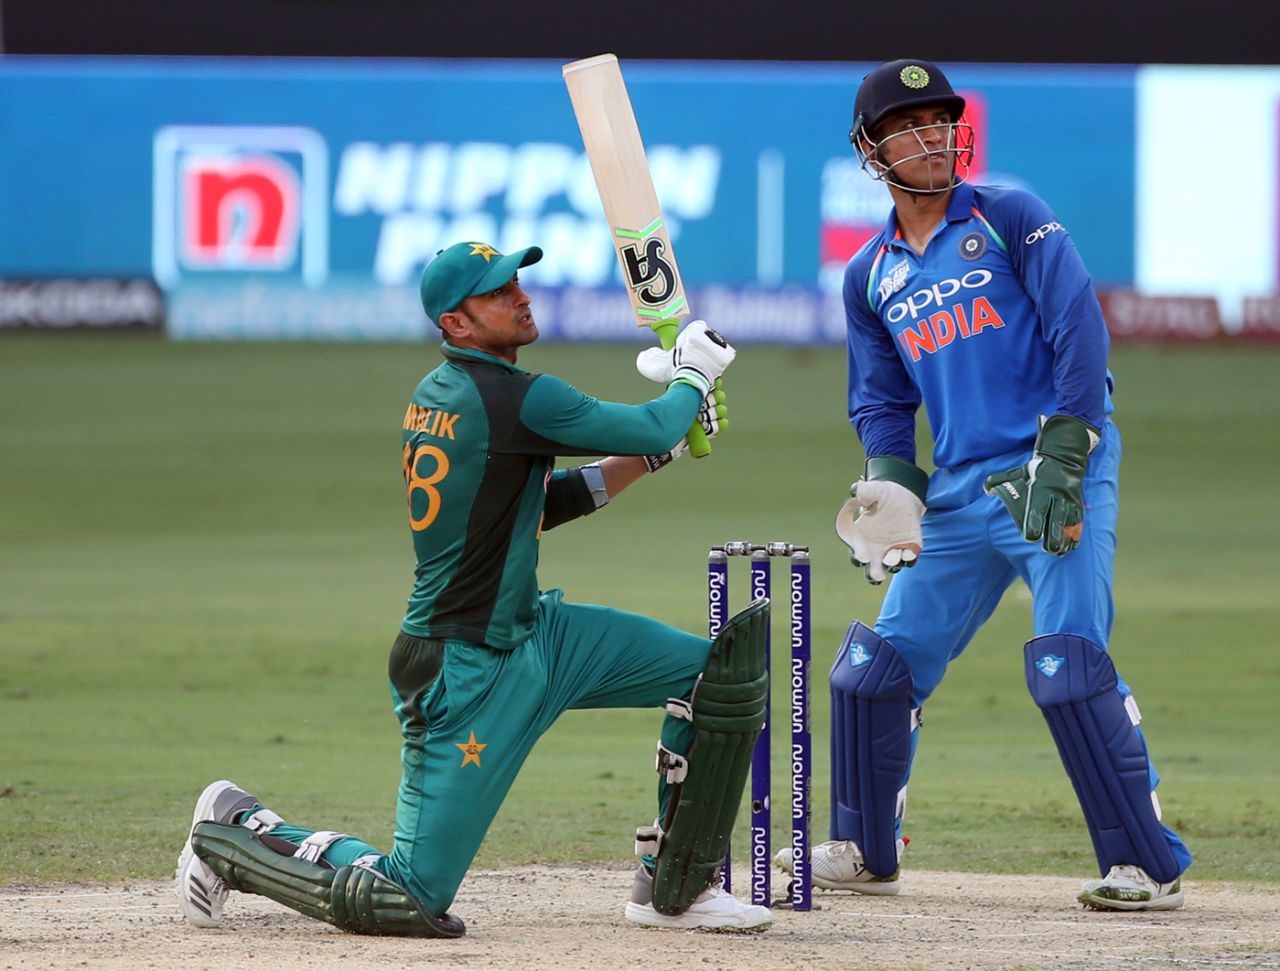 MS Dhoni plays spectator as Shoaib Malik launches one towards deep square leg, India v Pakistan, Super Four, Asia Cup 2018, Dubai, September 23, 2018